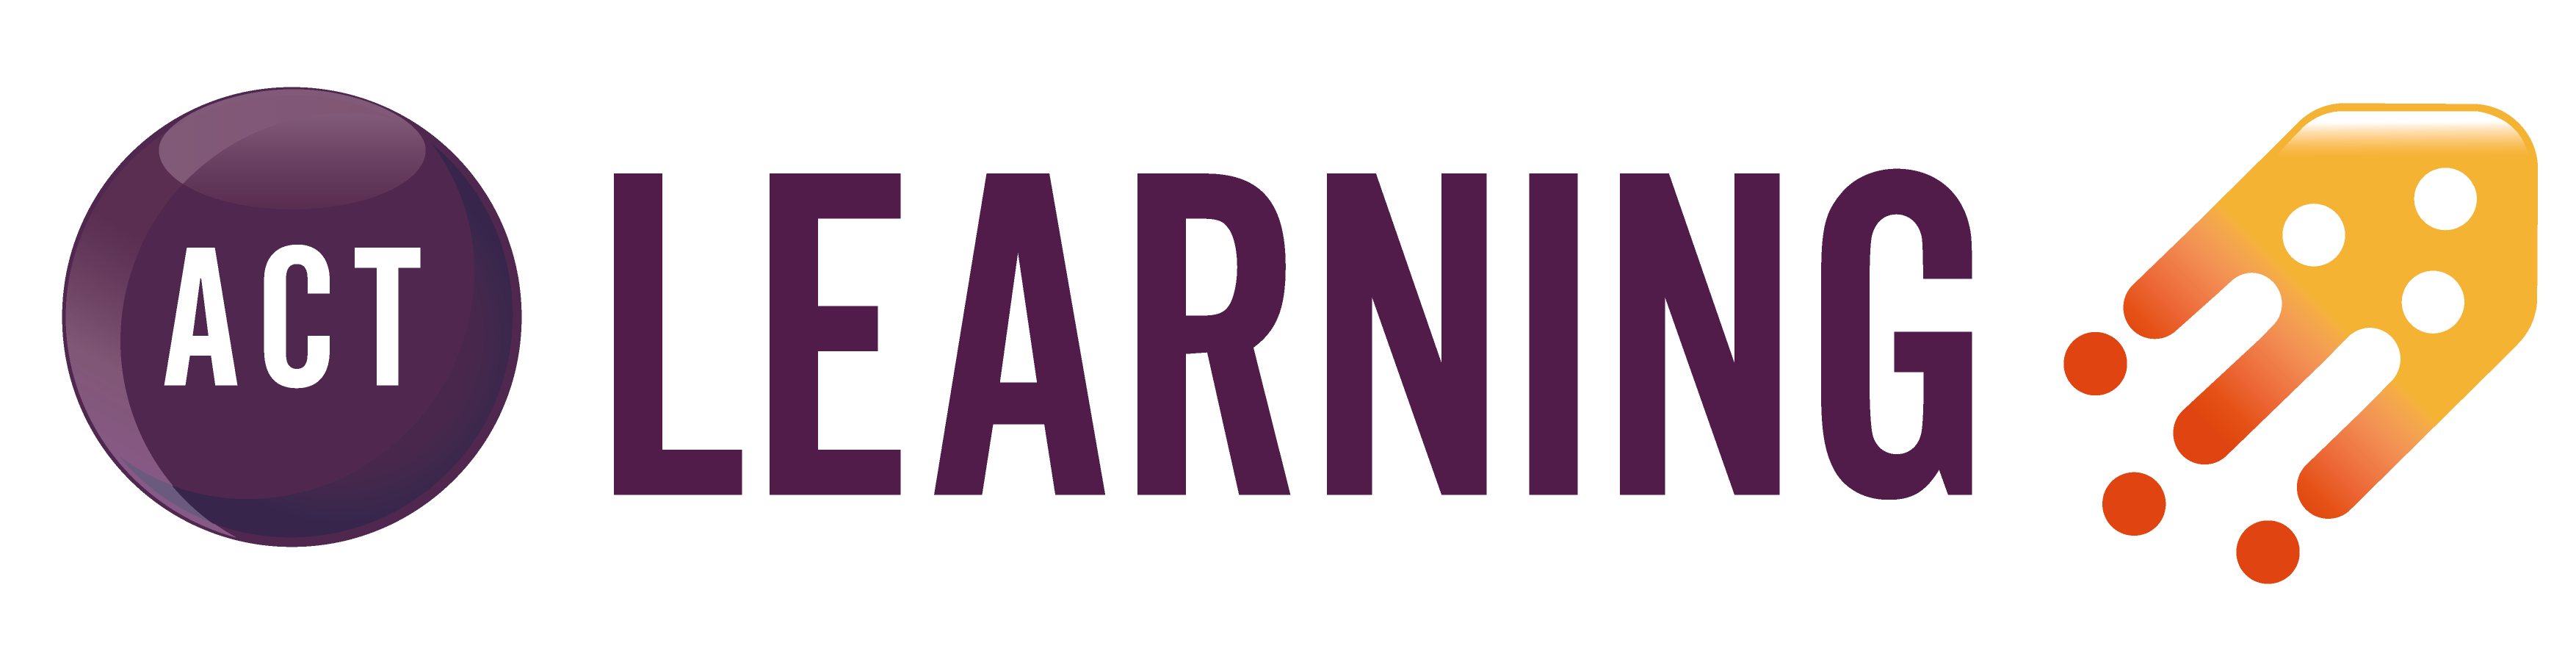 ACT Learning Logo